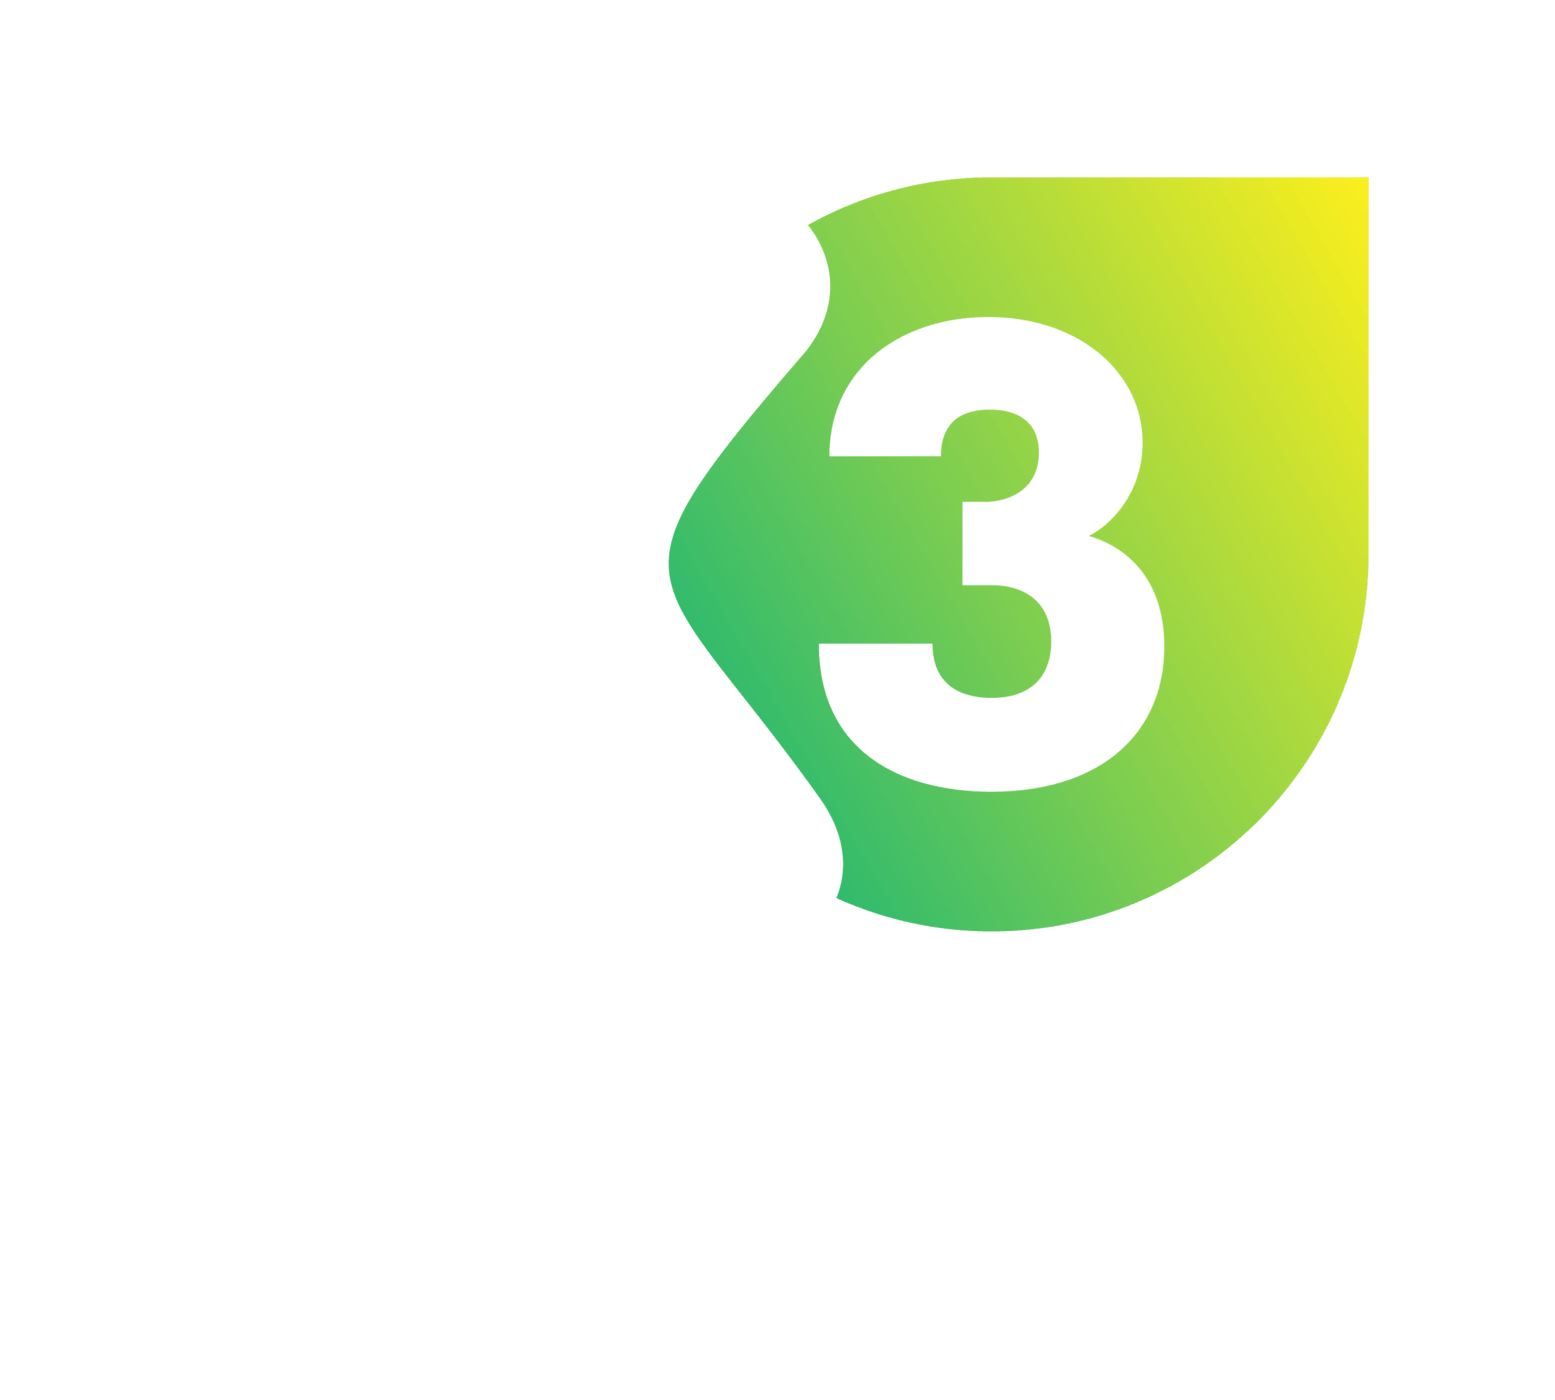 X3 Solar Energy